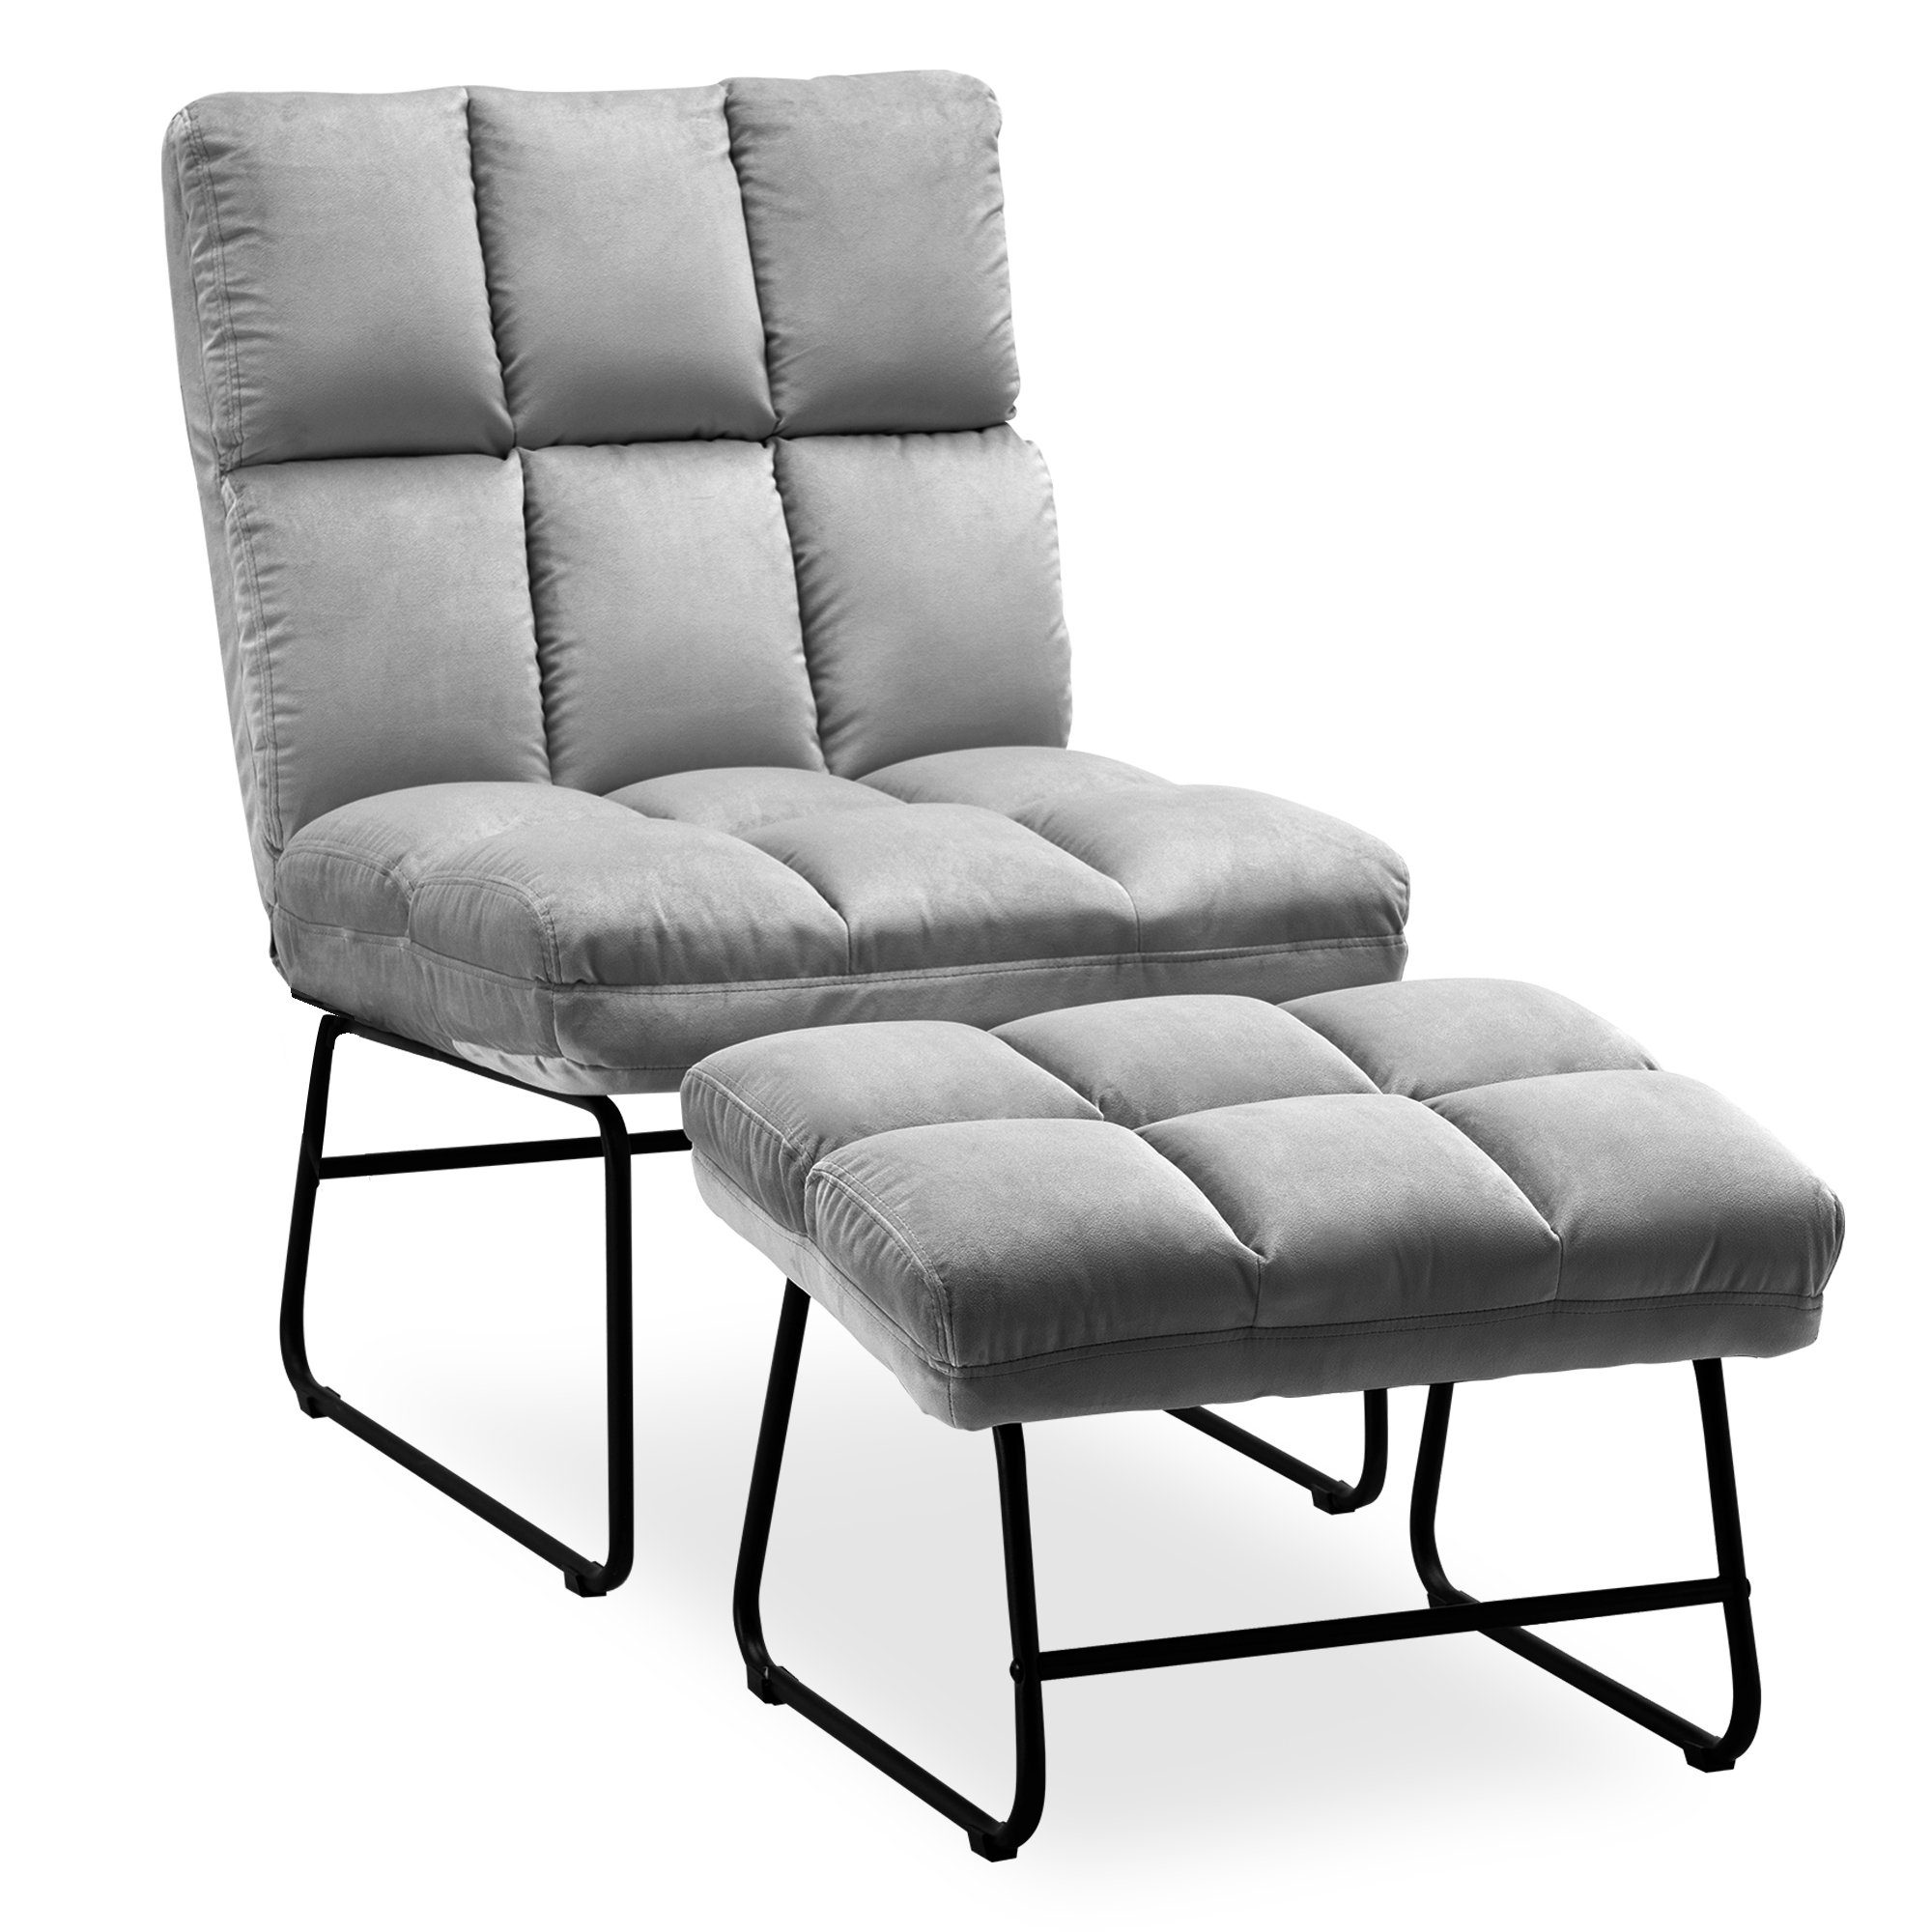 MCombo TV-Sessel MCombo Sessel mit Hocker 0014 / 0016, Relaxsessel für Wohnzimmer, moderner Fernsehsessel Loungesessel Stuhl